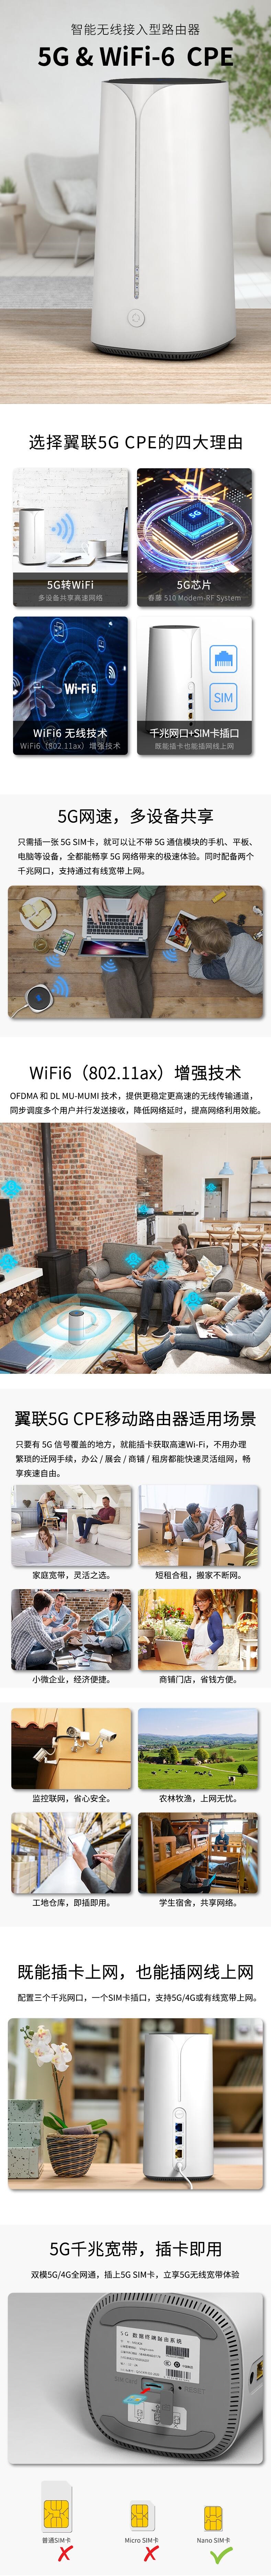 5G和Wi-Fi6合二为一 翼联5G CPE重新定义智能路由器